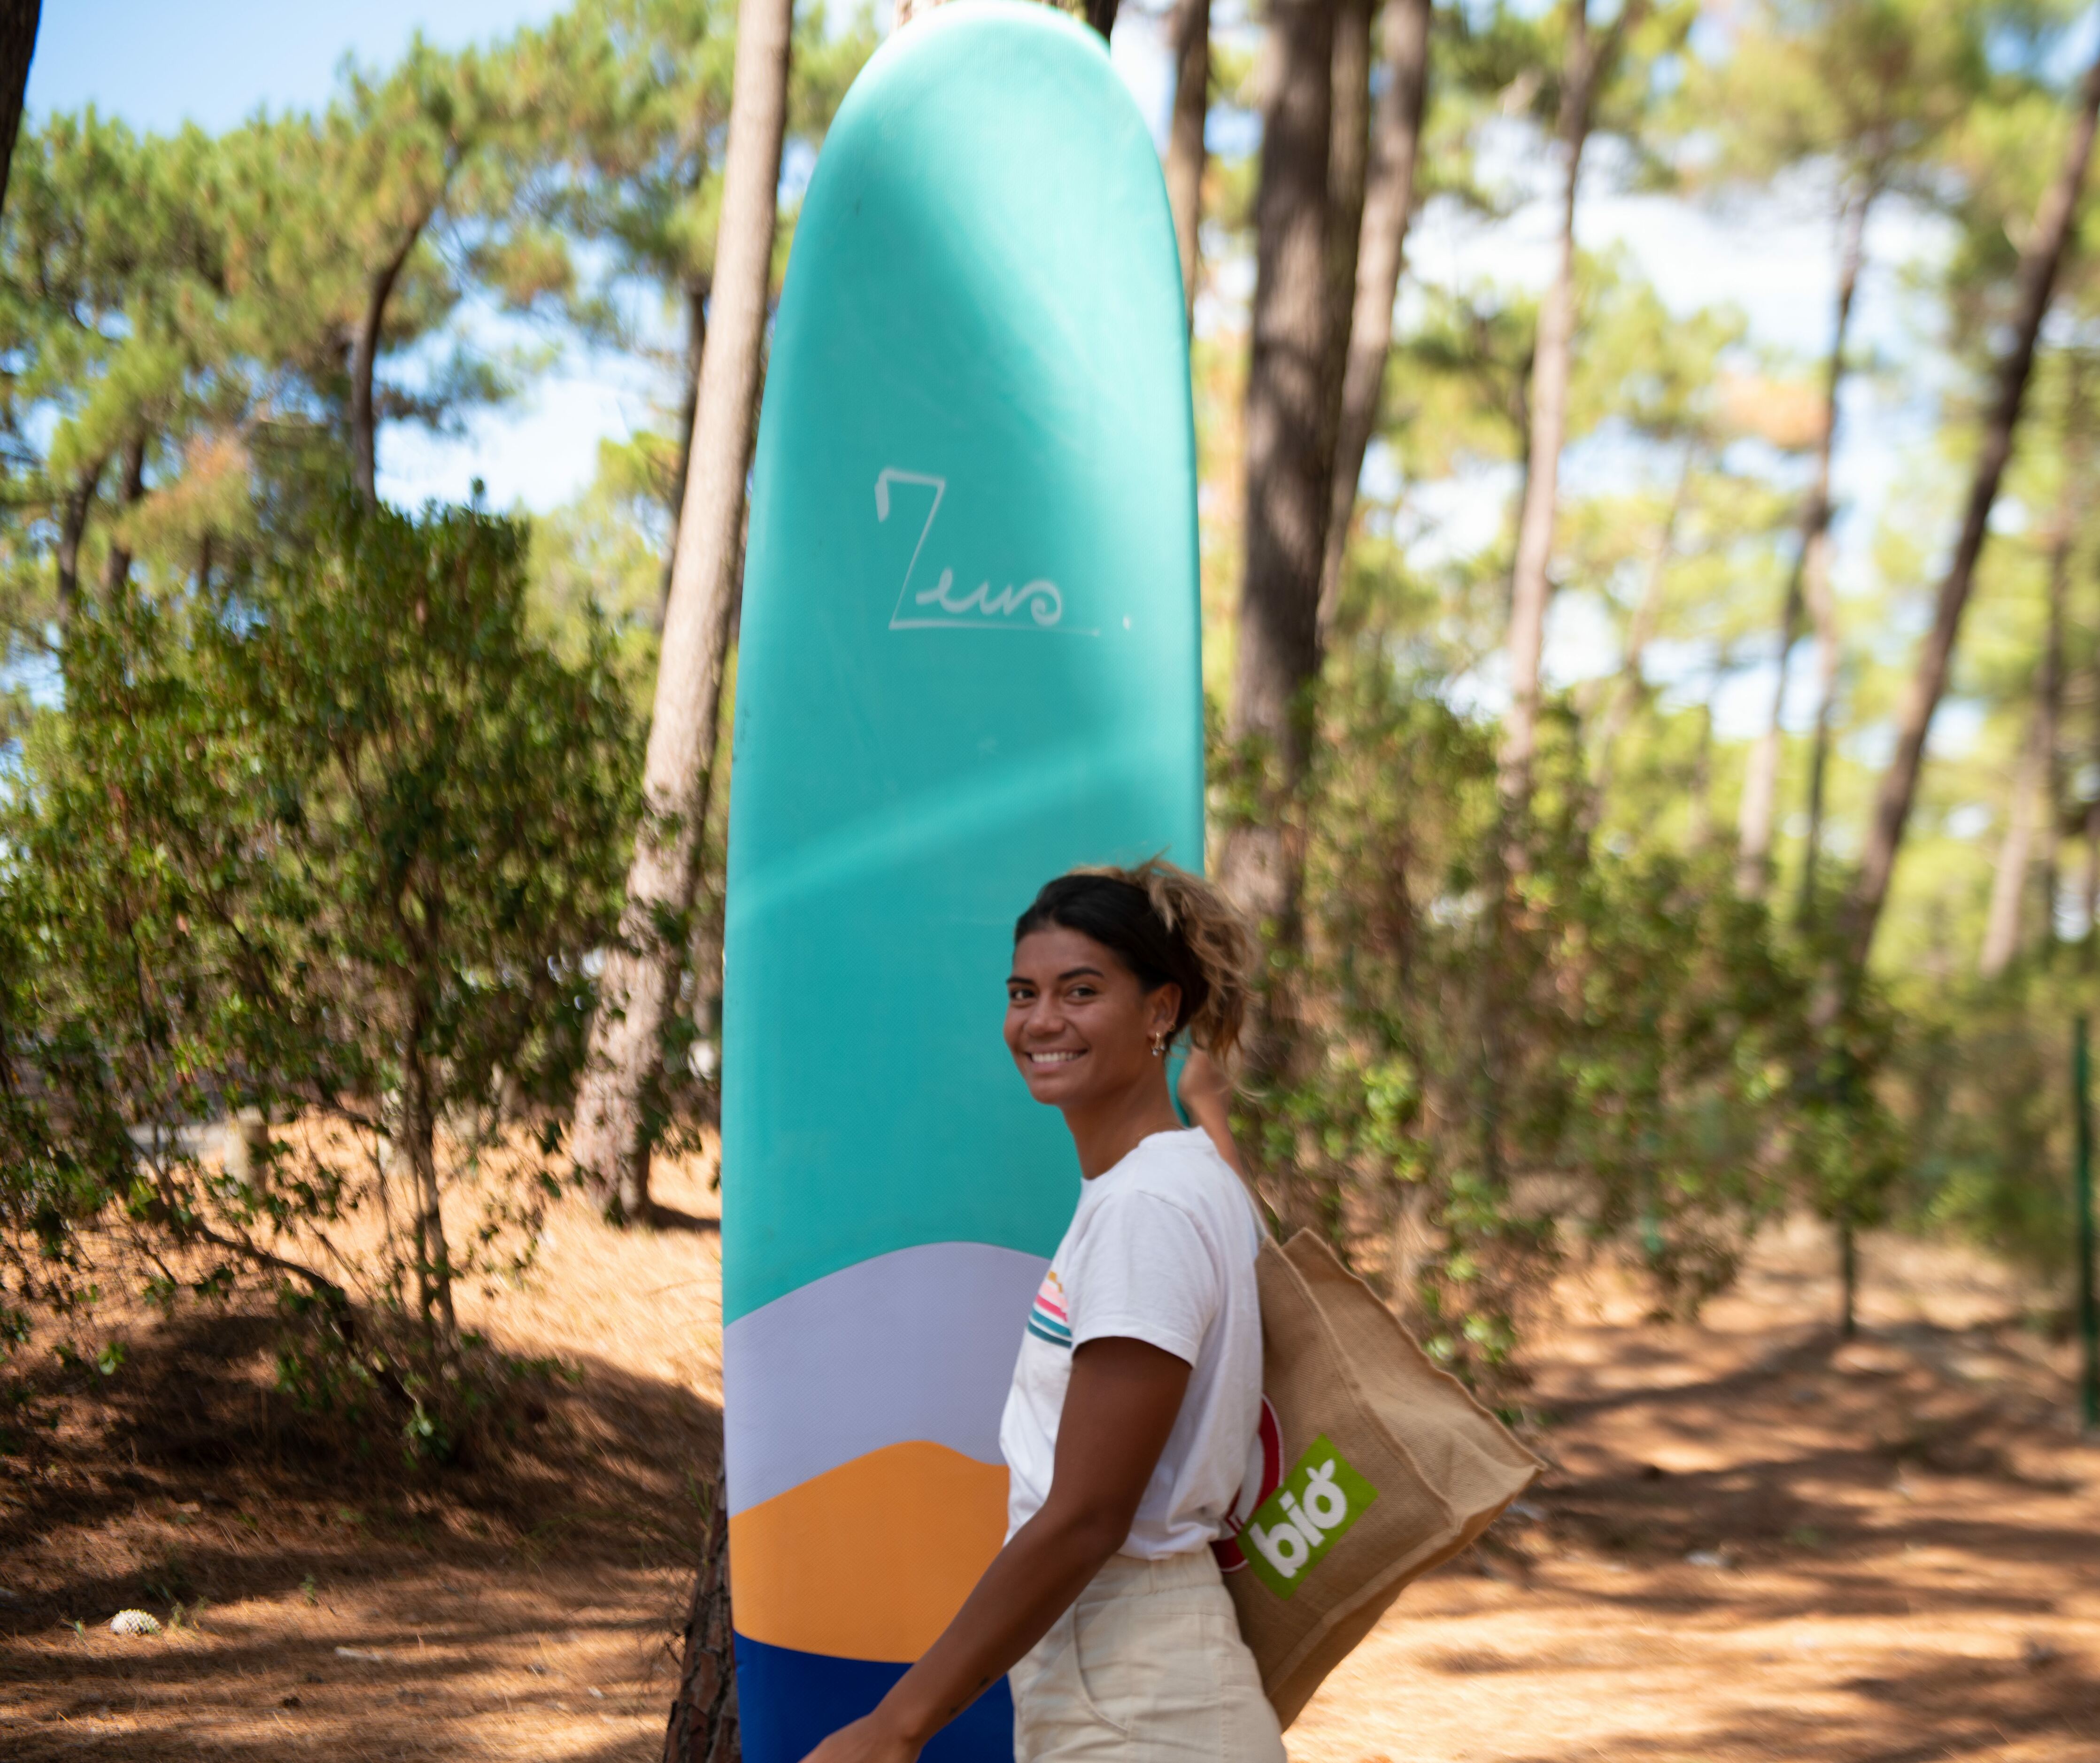 Ideal choice for a suitable surf longboard - Zeus Surf